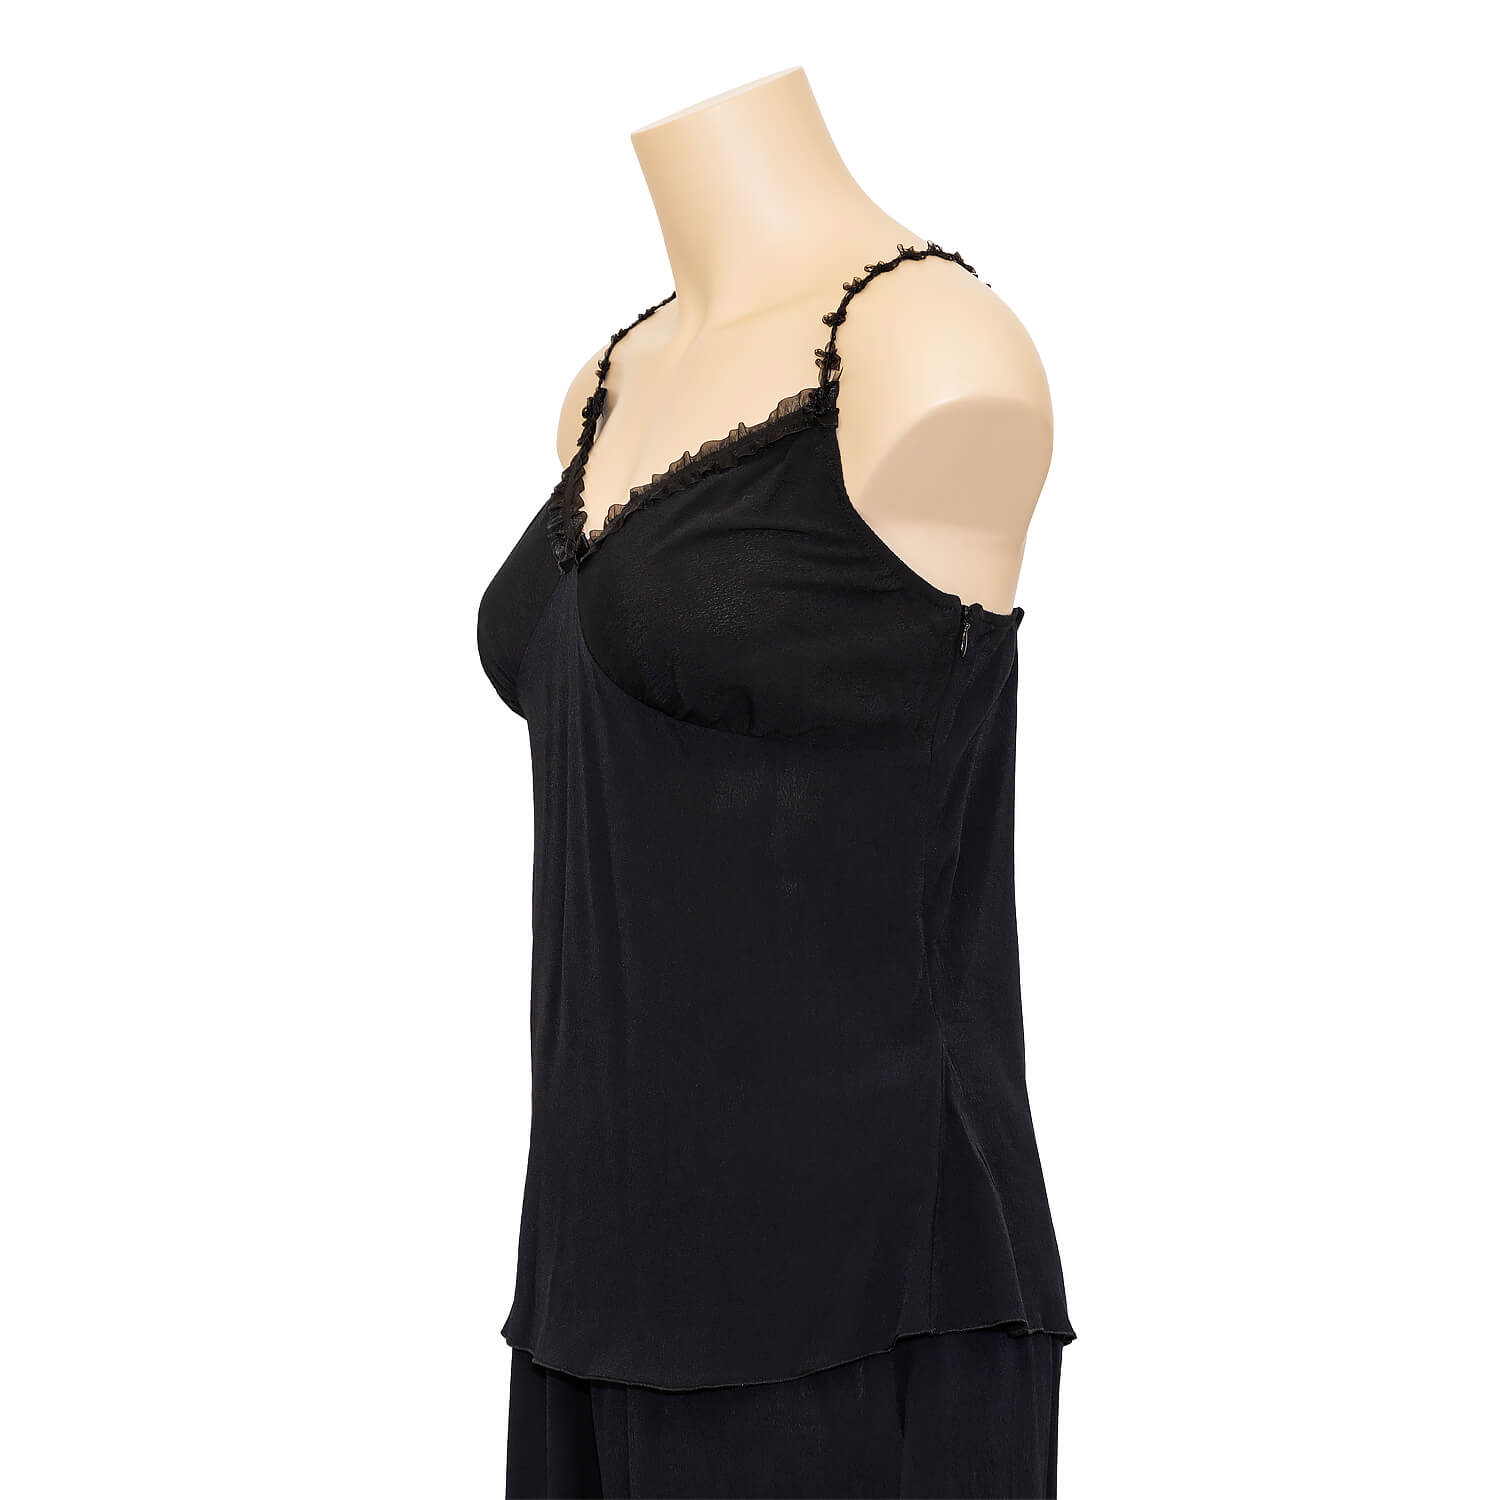 view of side zip on ebony black camisole